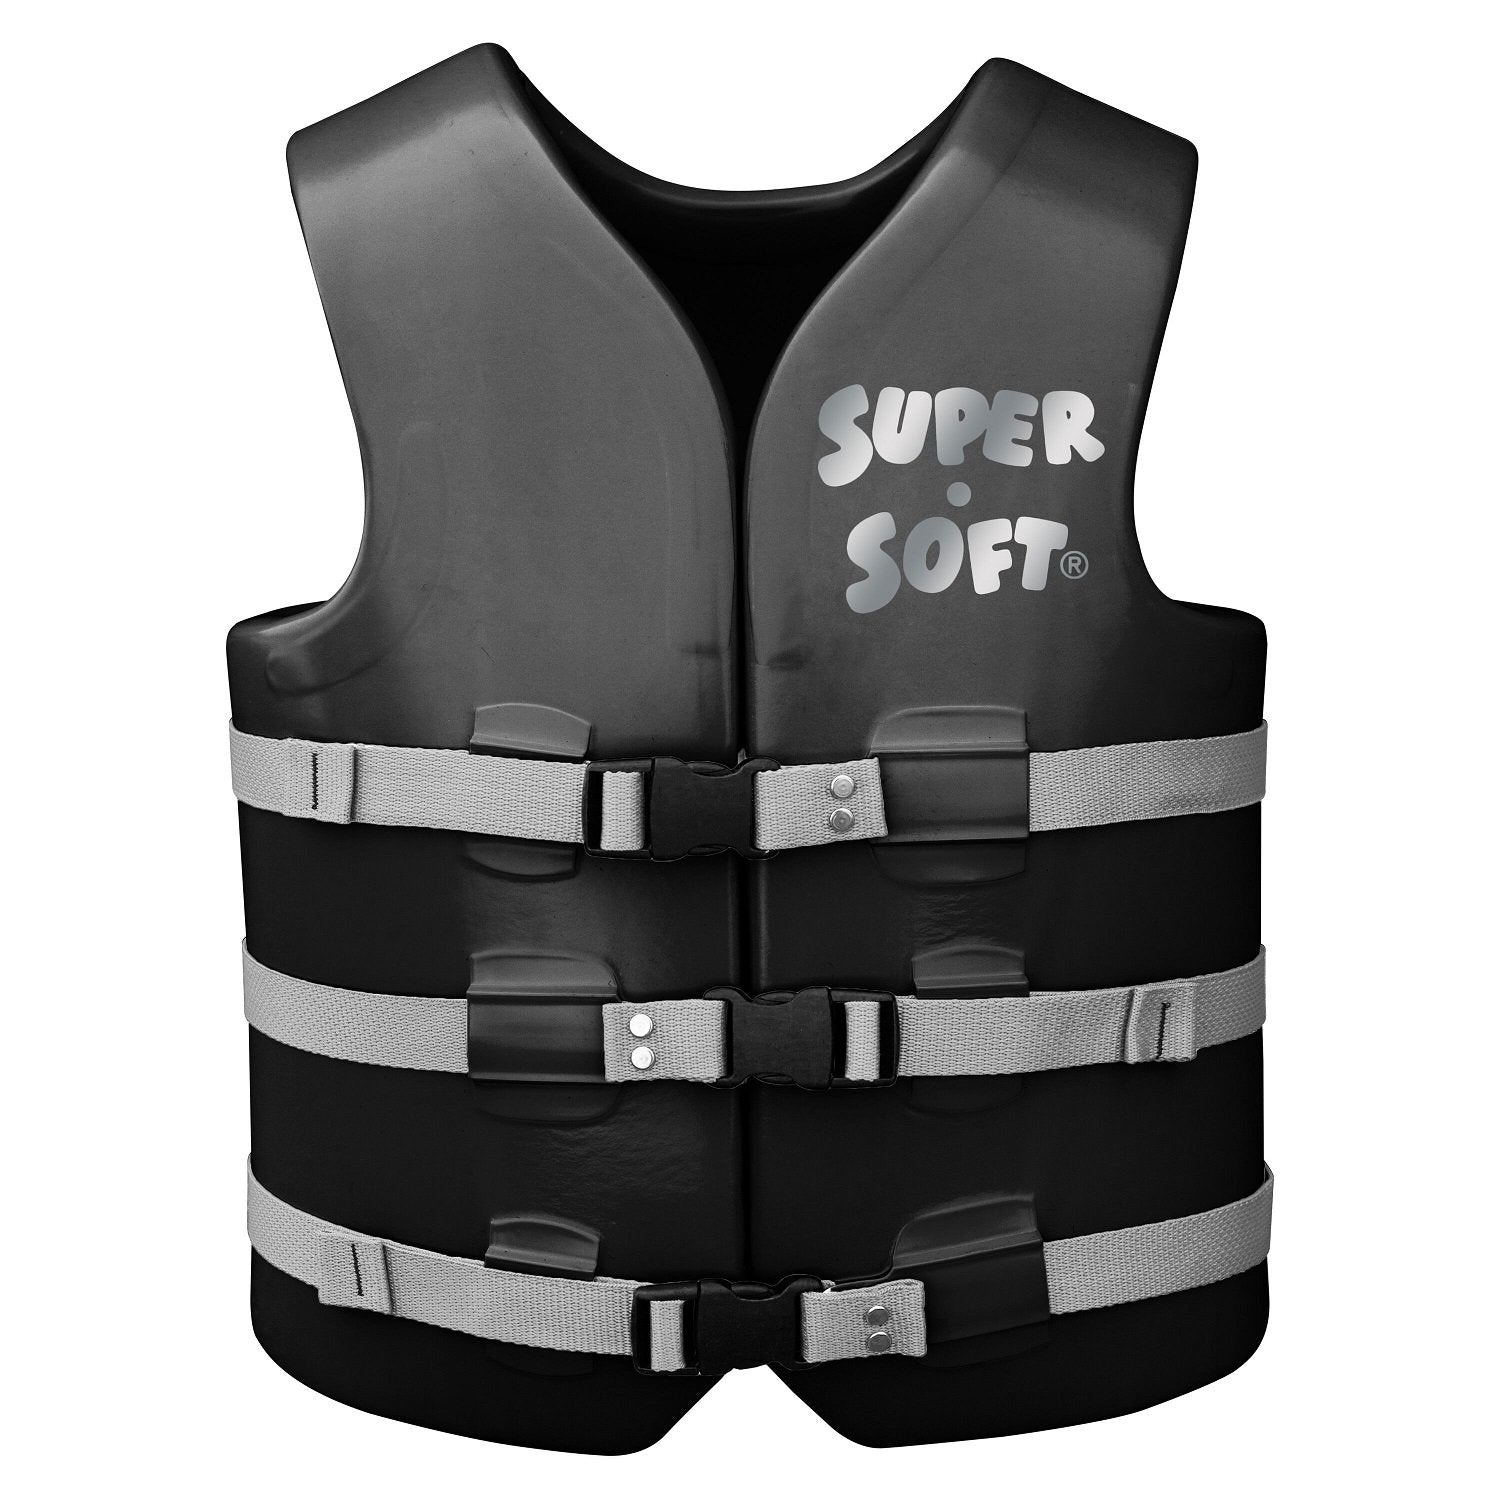 TRC Recreation 1023016 Super Soft Adult USCG Life Jacket, Medium - Black